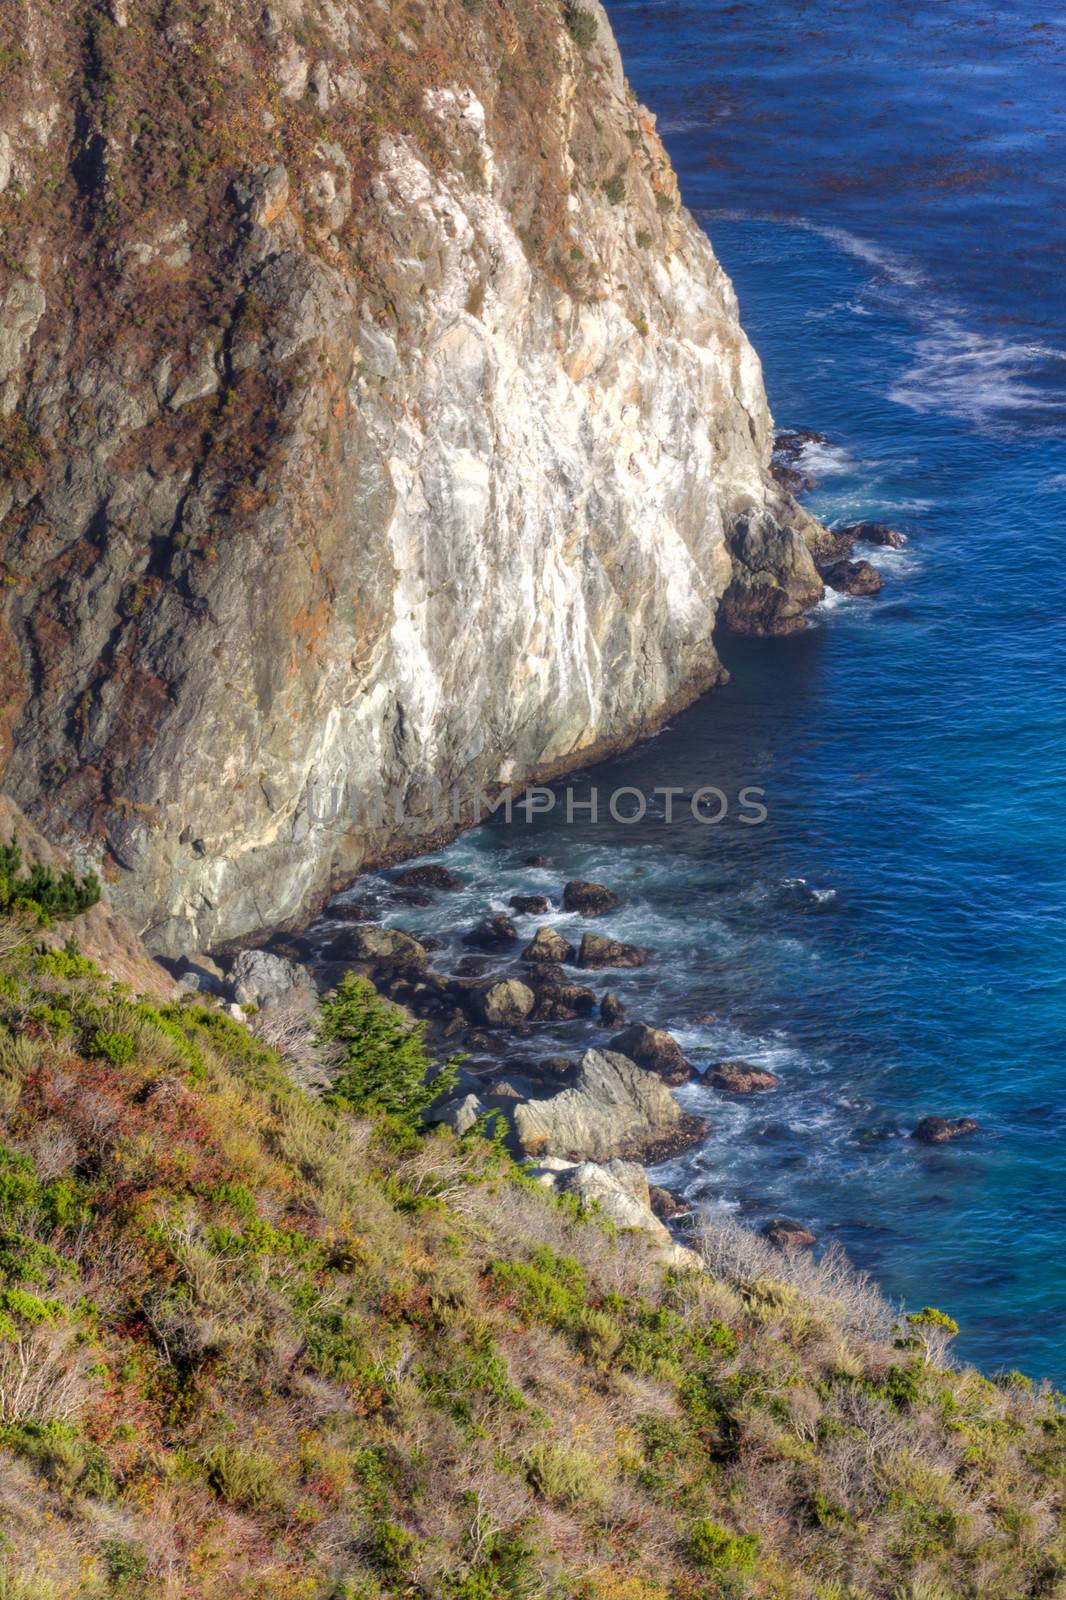 Vertical Image of Cliffs of Big Sur Overlooking the Pacific Ocean